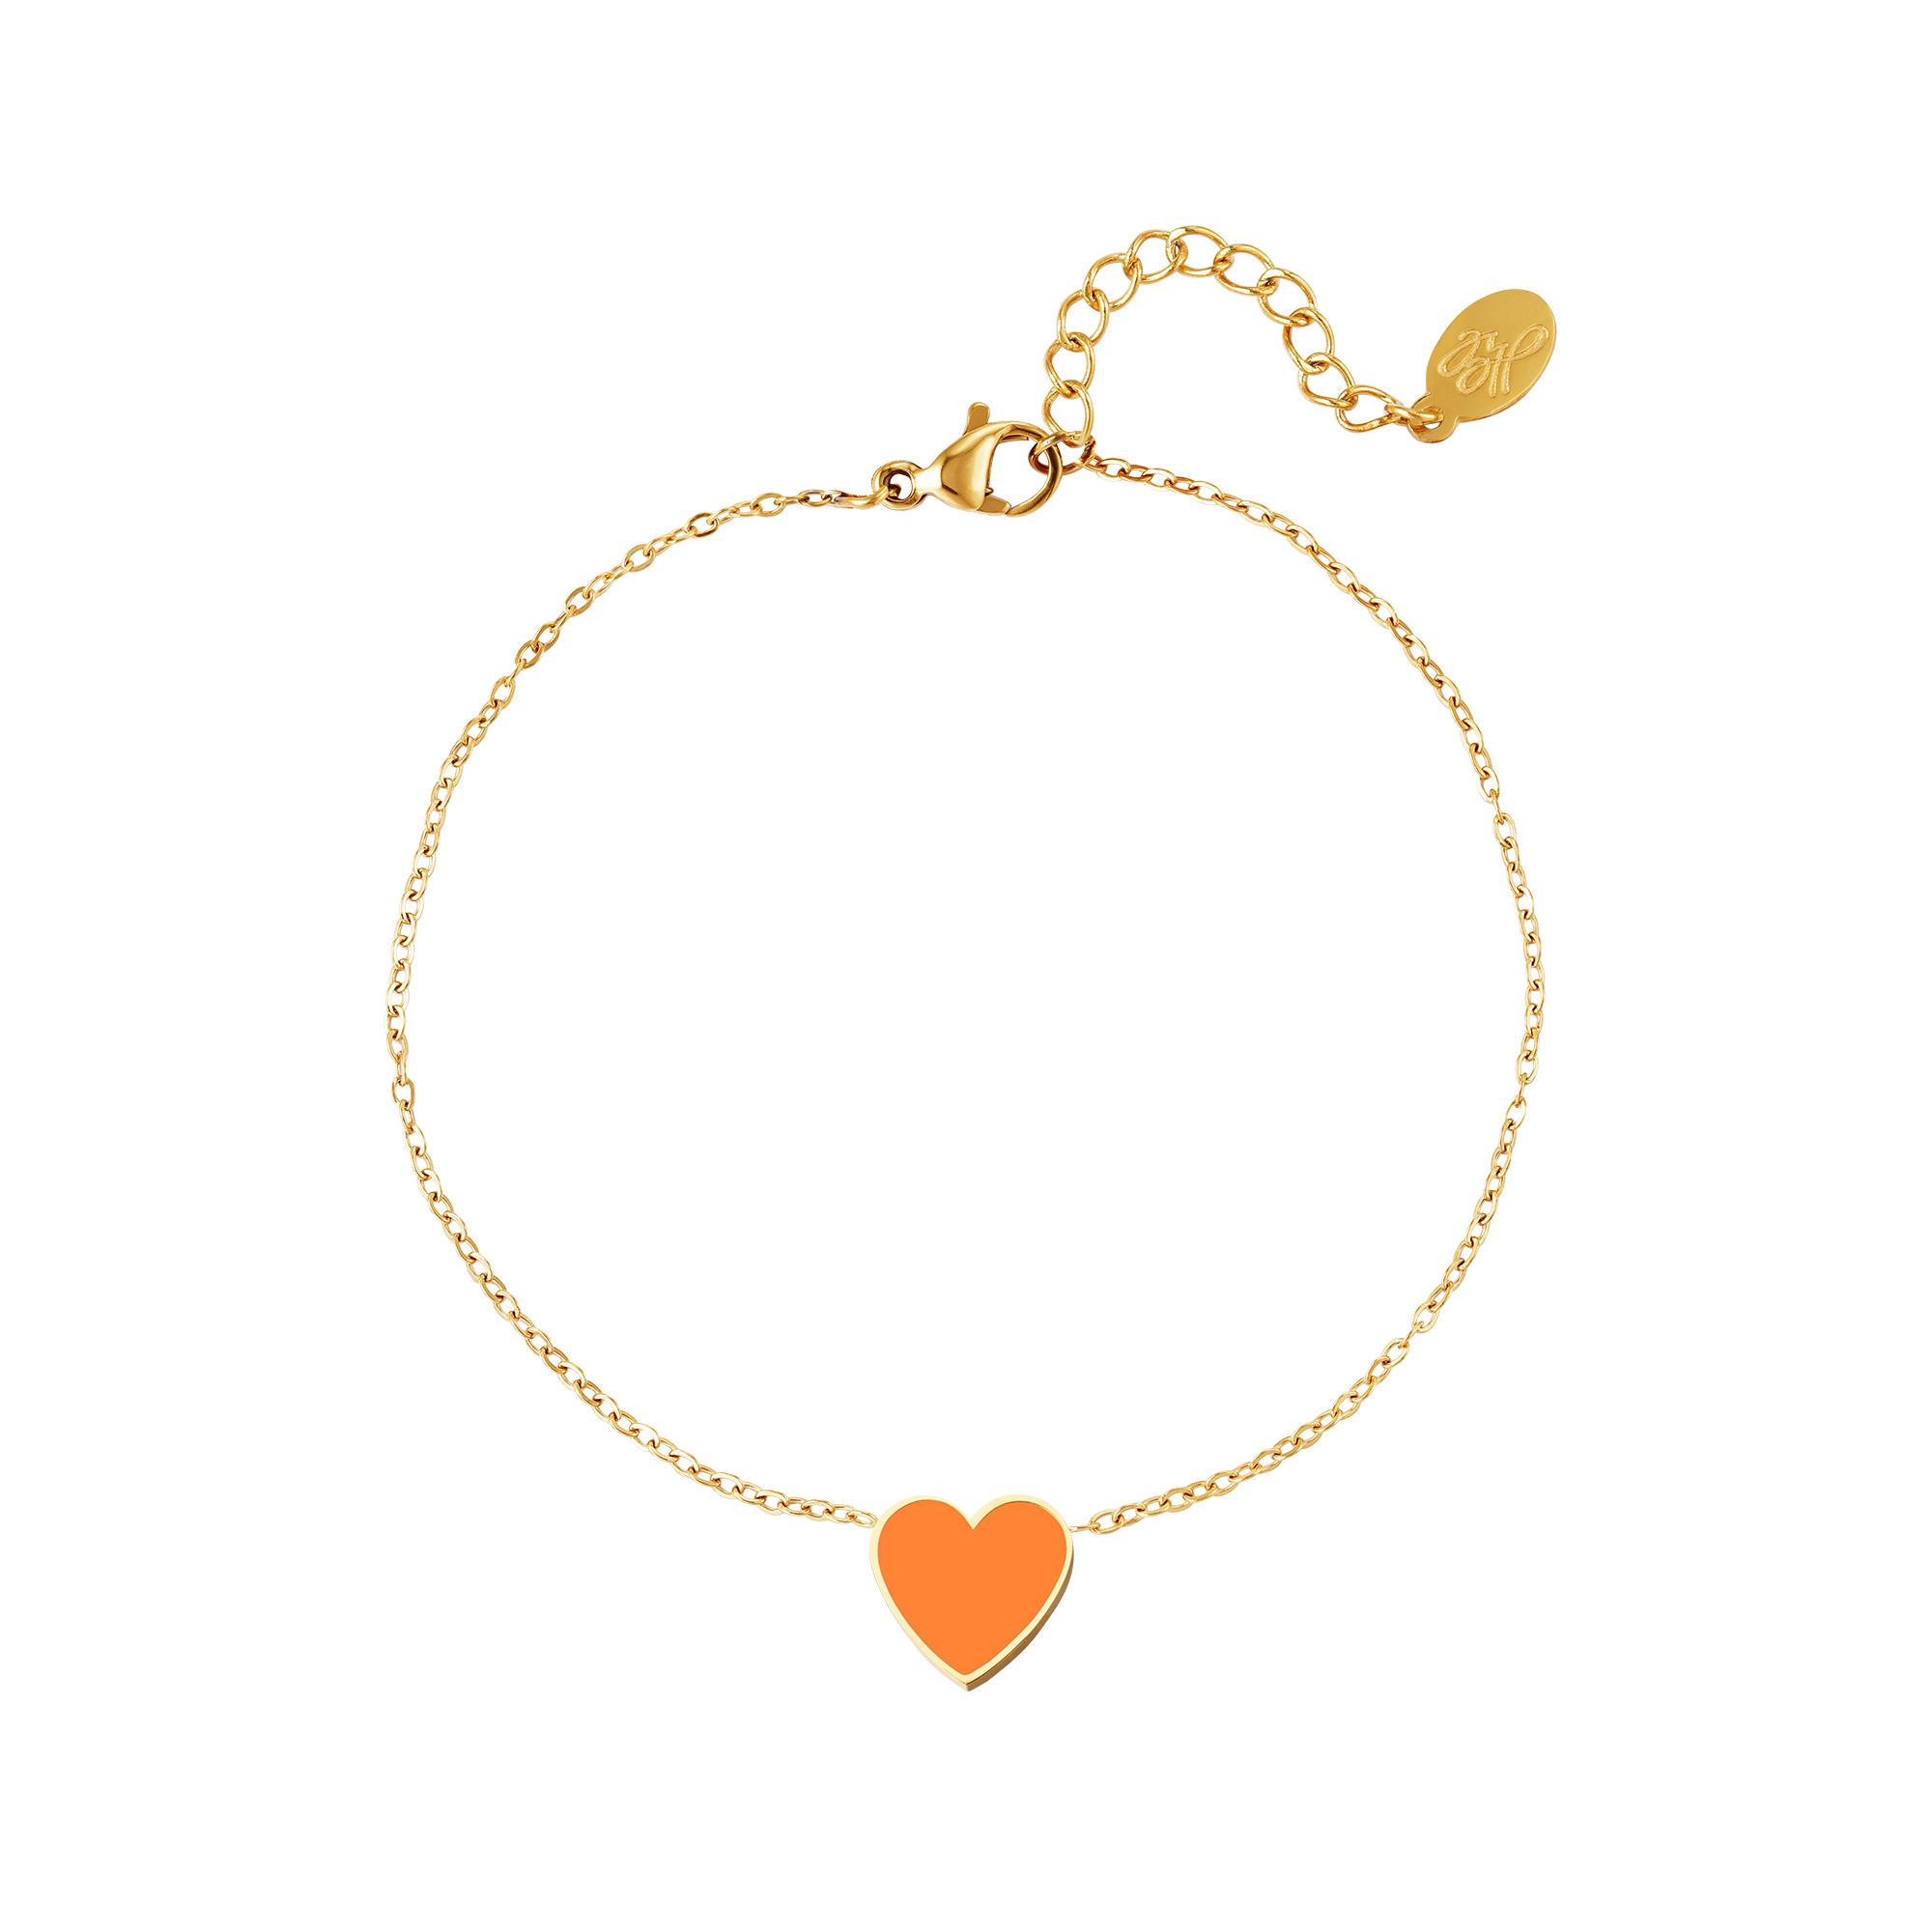 RVS Armband Colorful Heart oranje gouden armband met oranje hartje fashion sieraden kopen bestellen